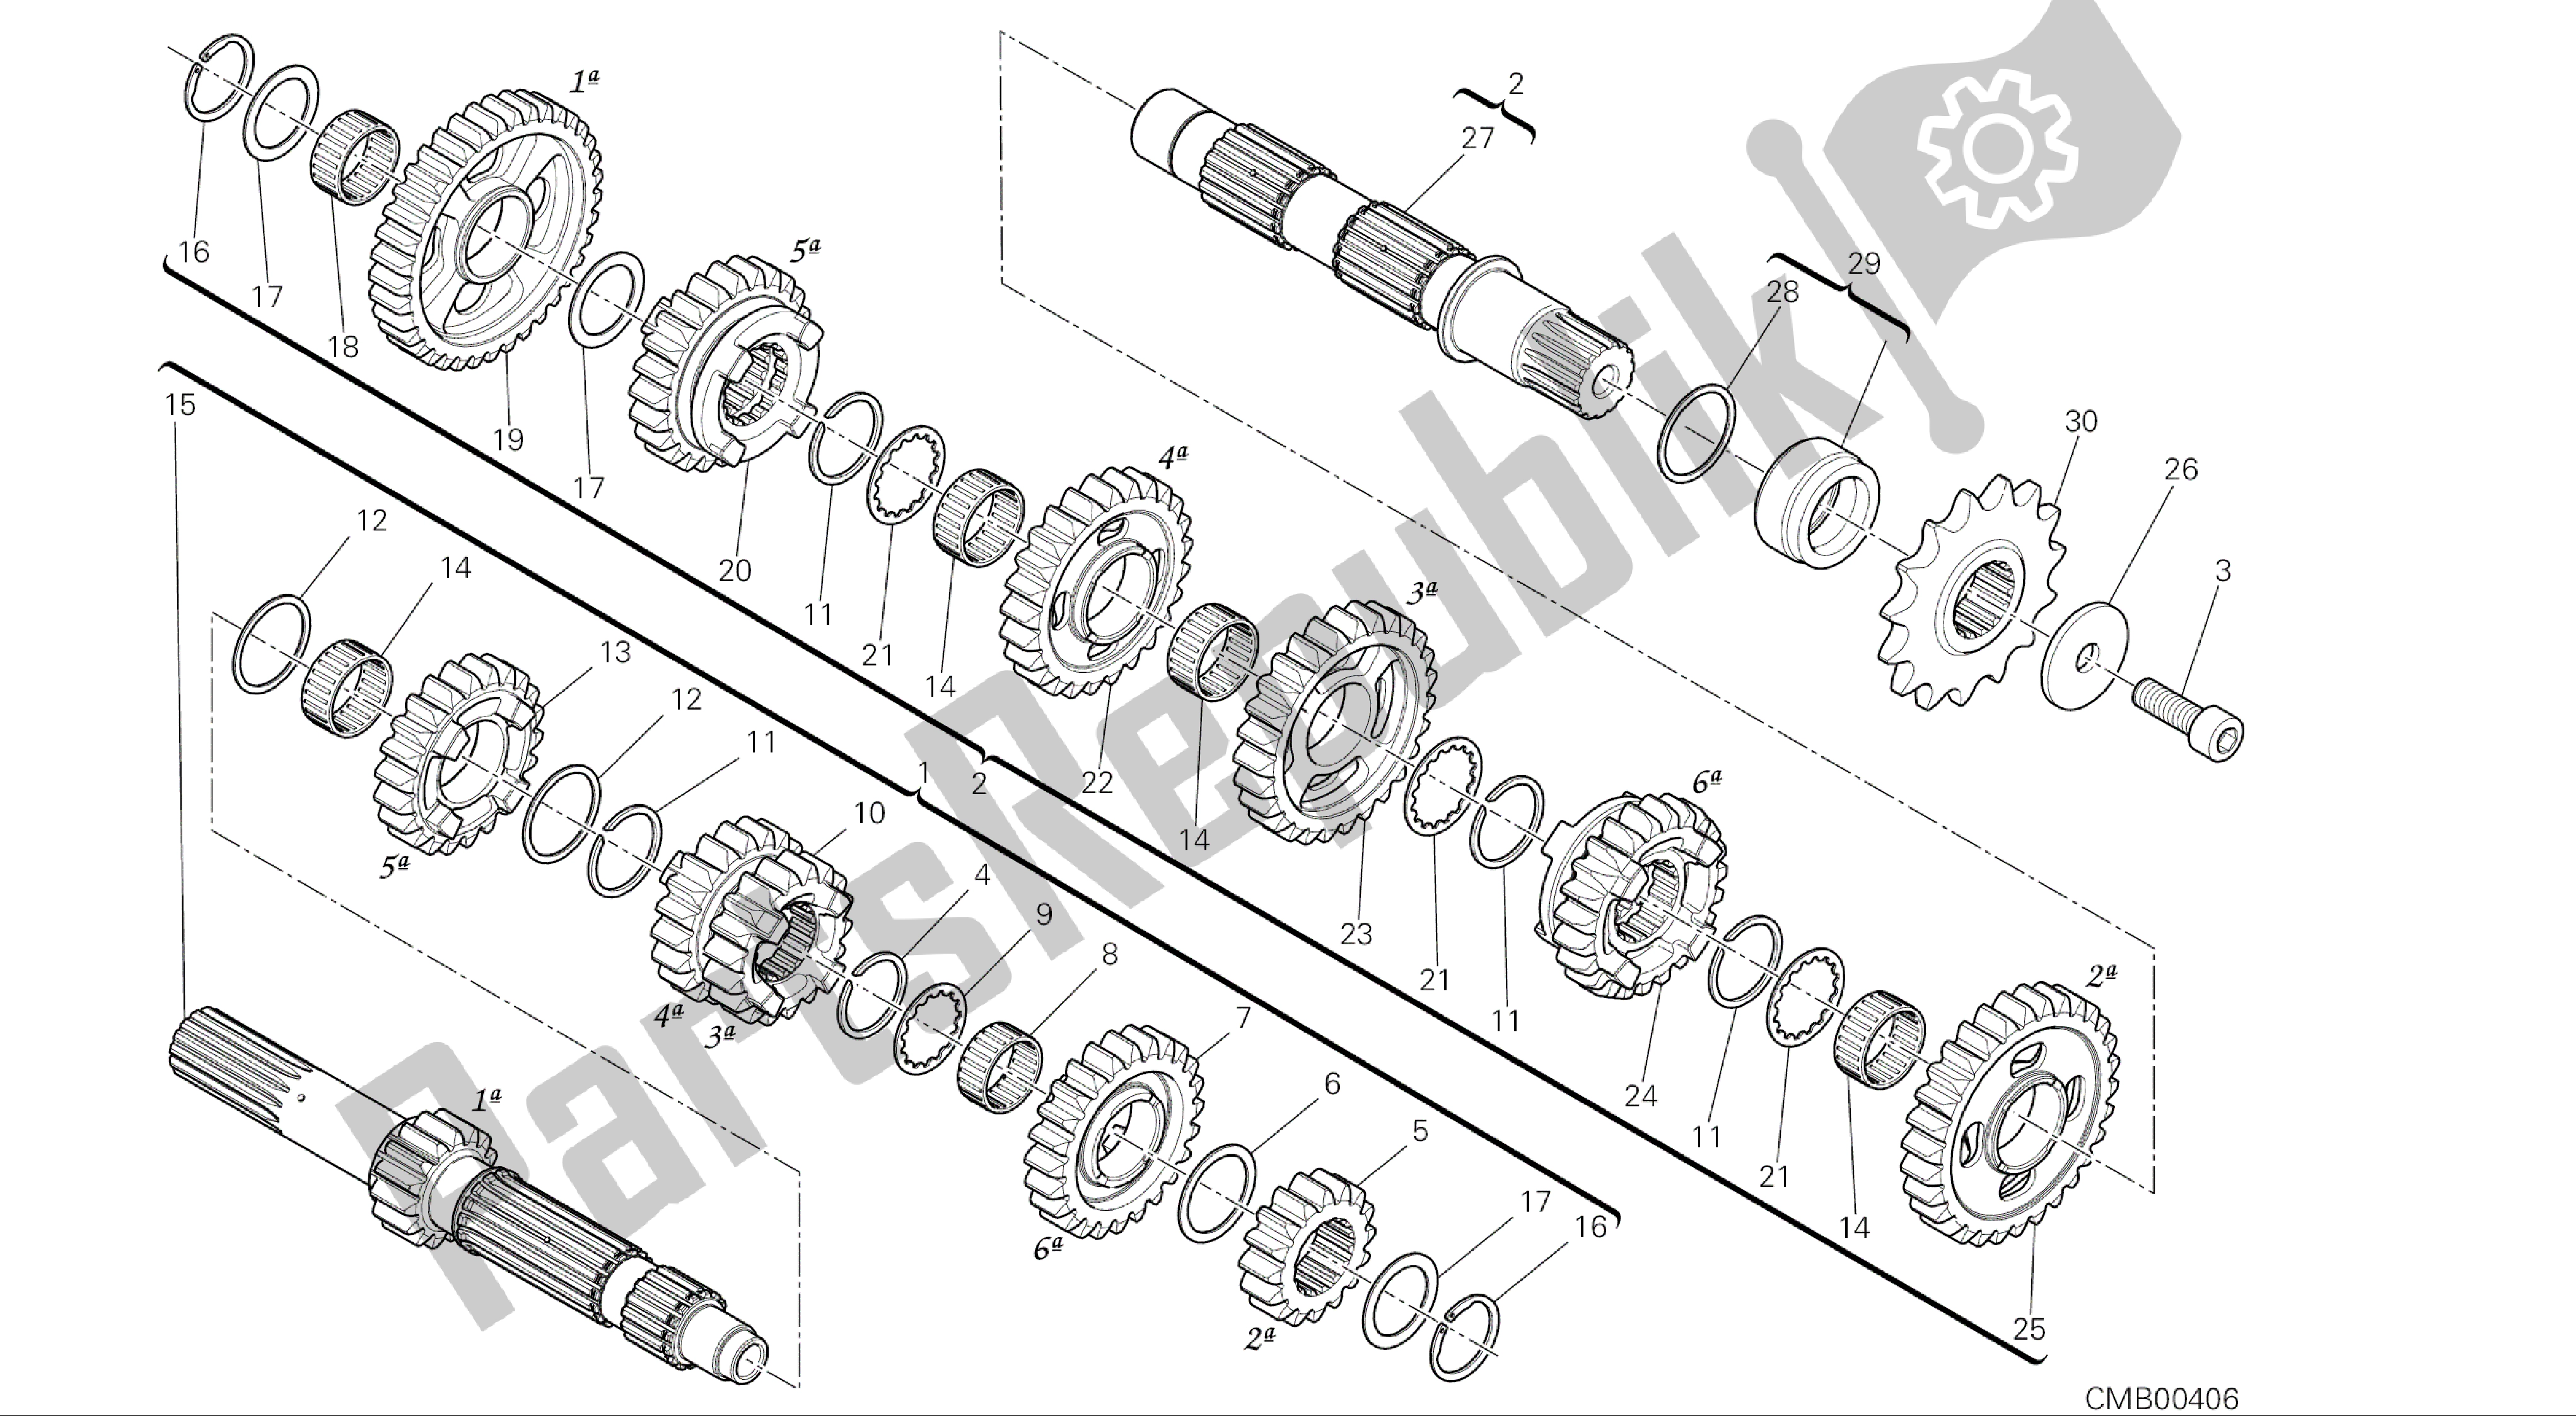 Alle onderdelen voor de Tekening 003 - Versnellingsbak [mod: 1199 R; Xst: Aus, Eur, Fra, Jap, Twn] Groepsmotor van de Ducati Panigale R 1200 2016